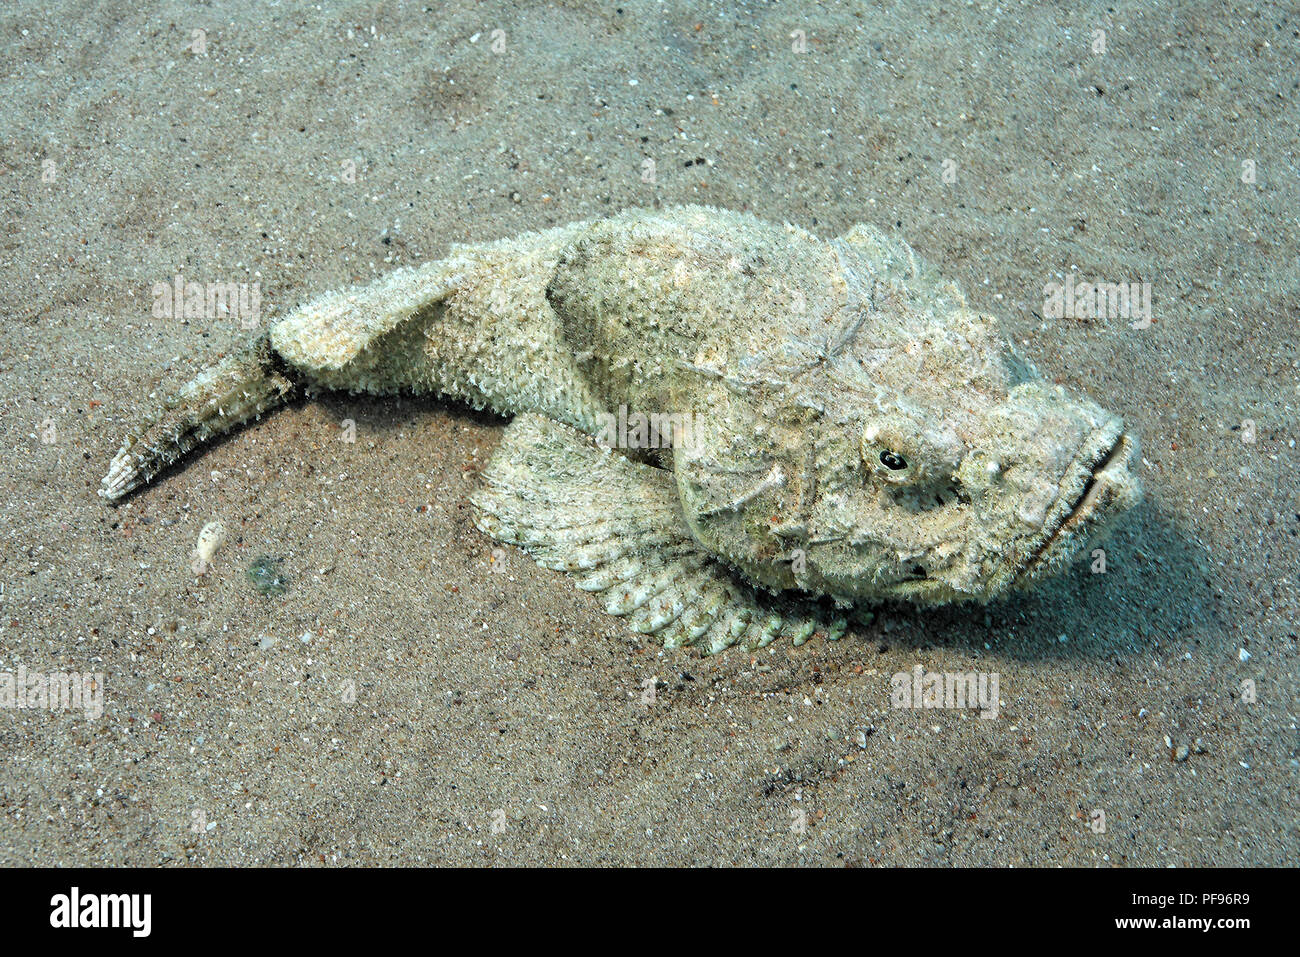 False stonefish, Humpback Scorpionsfish or Devil scorpionfish (Scorpaenopsis diabolus) laying on sandy sea bed, Sinai, Egypt Stock Photo